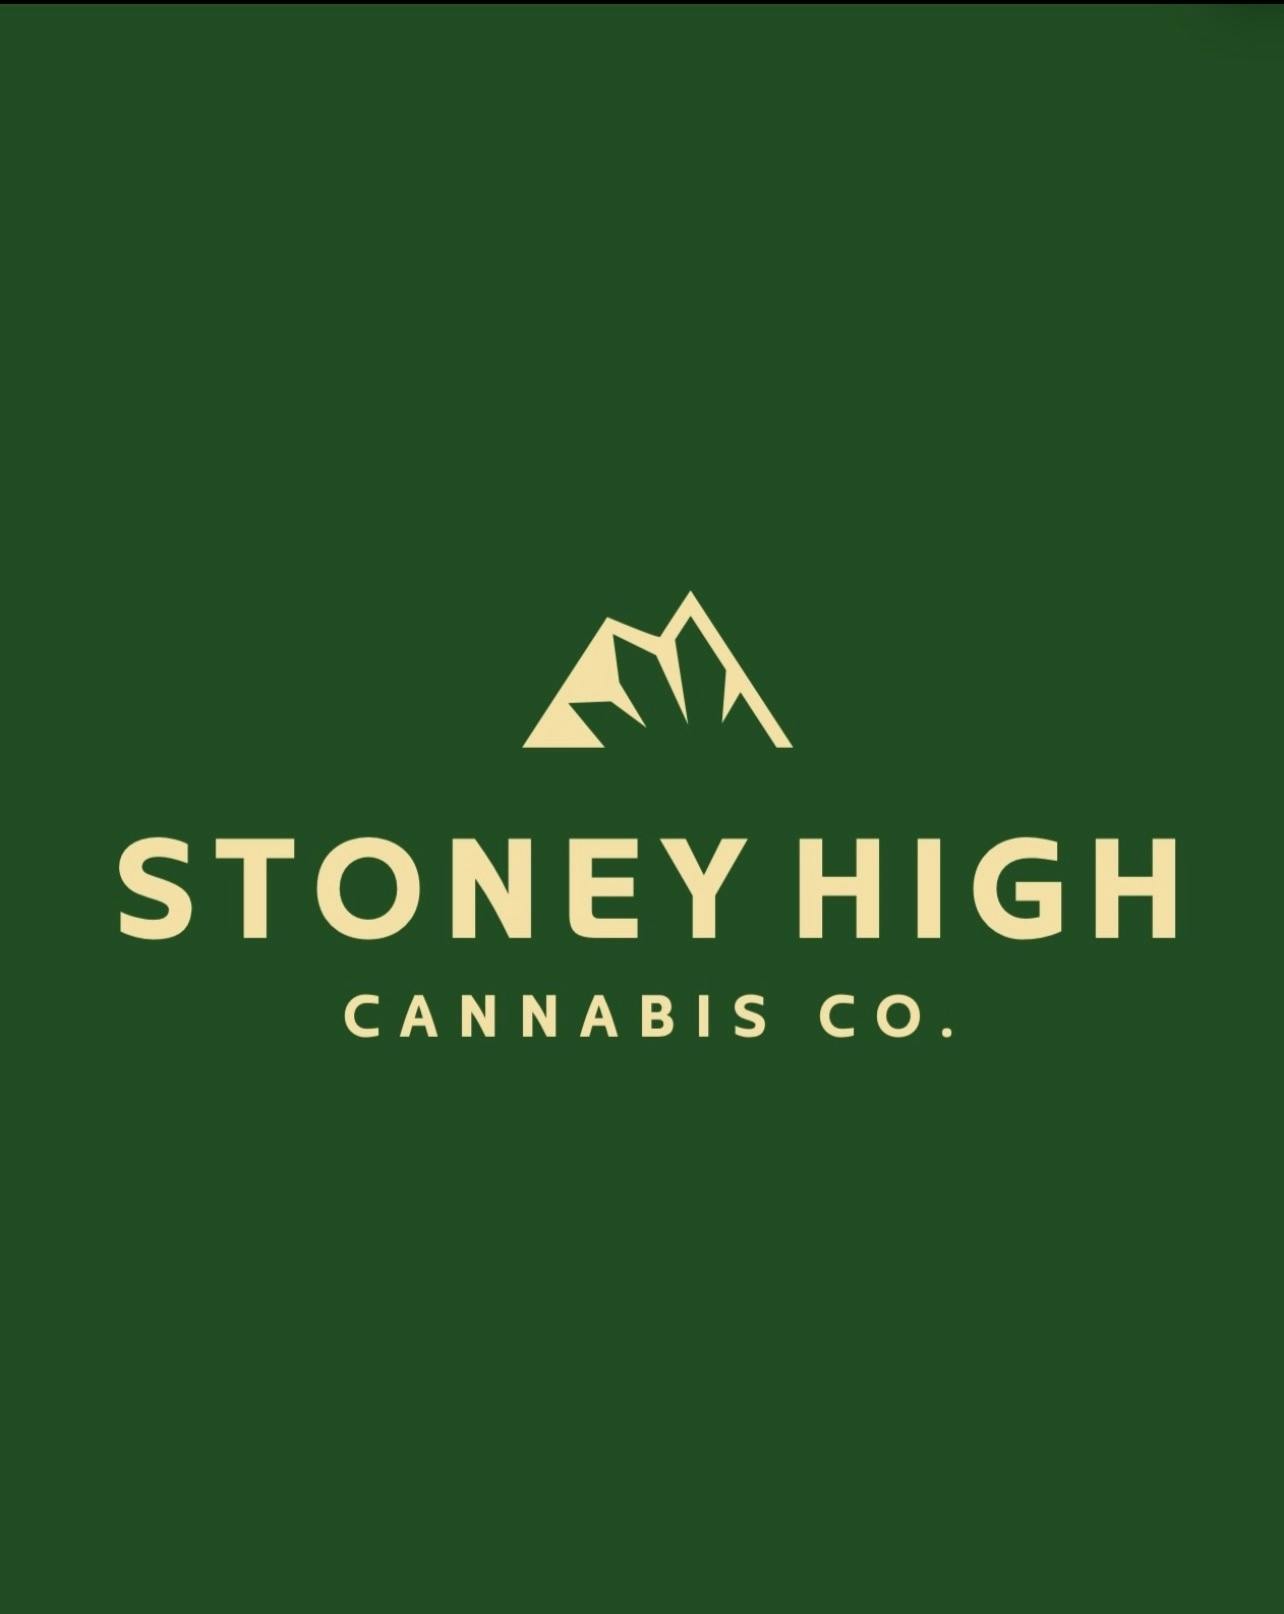 Stoney High Cannabis Corp logo